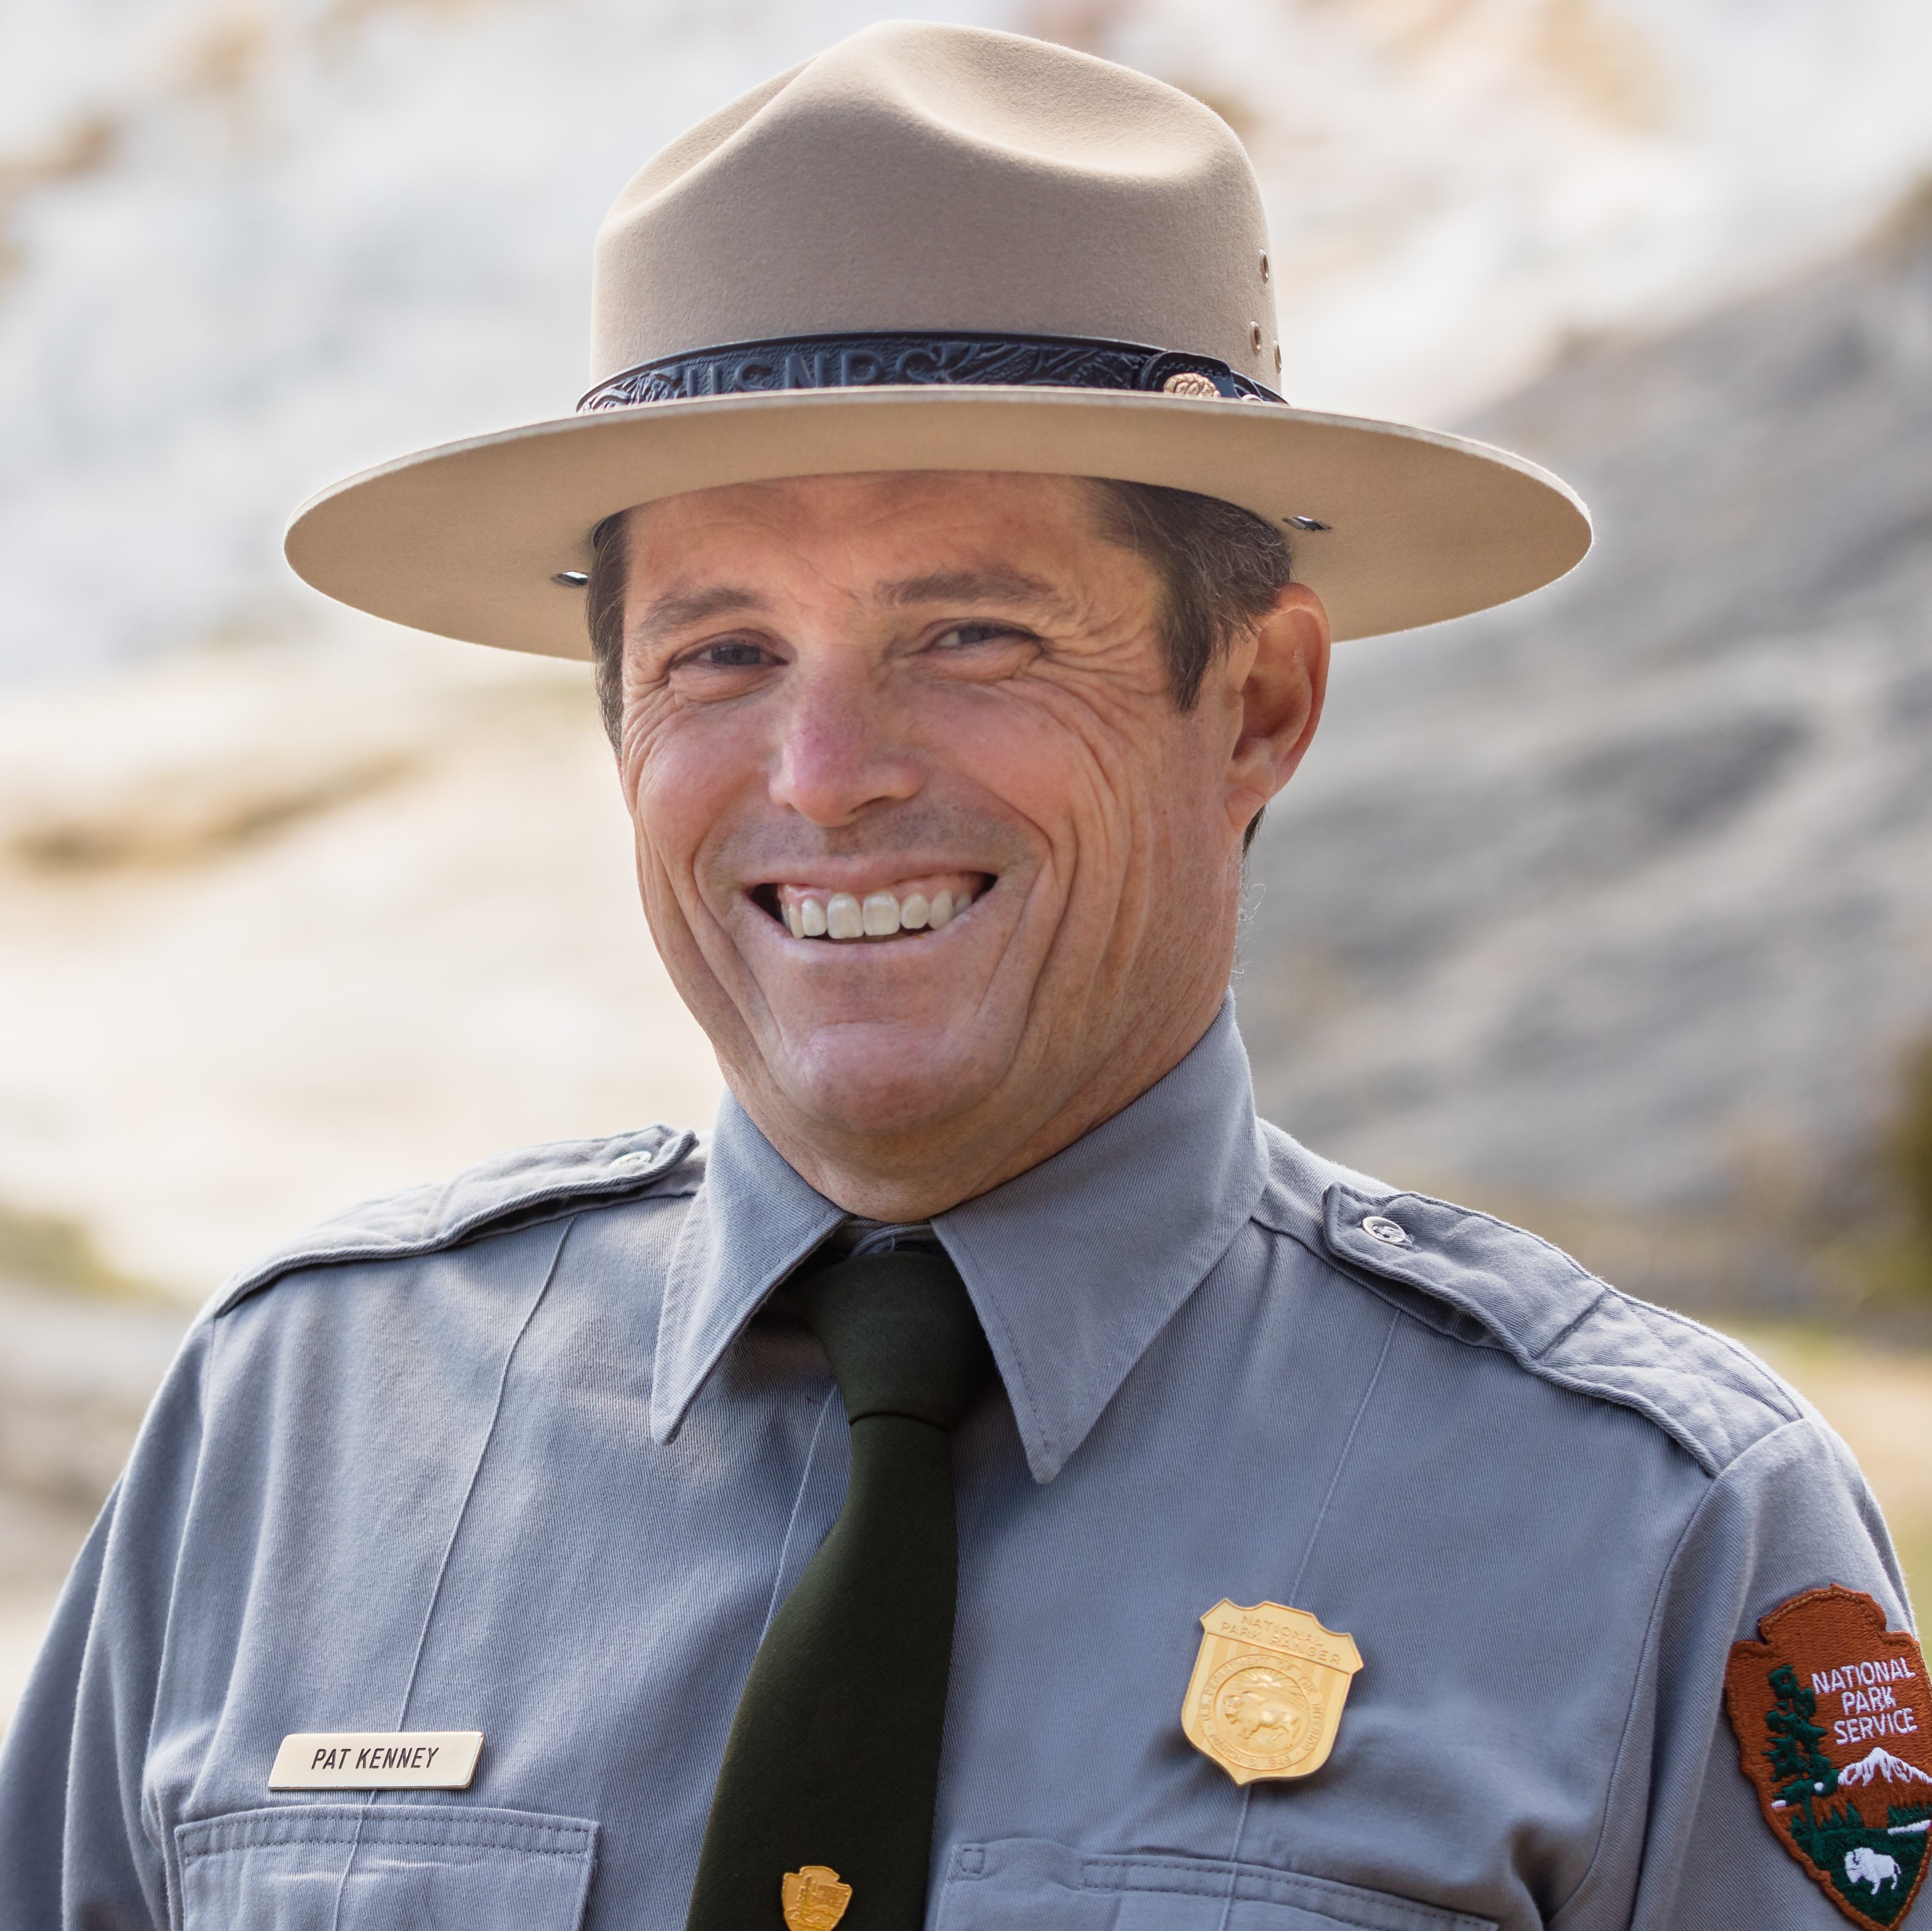 A man in an NPS uniform smiles